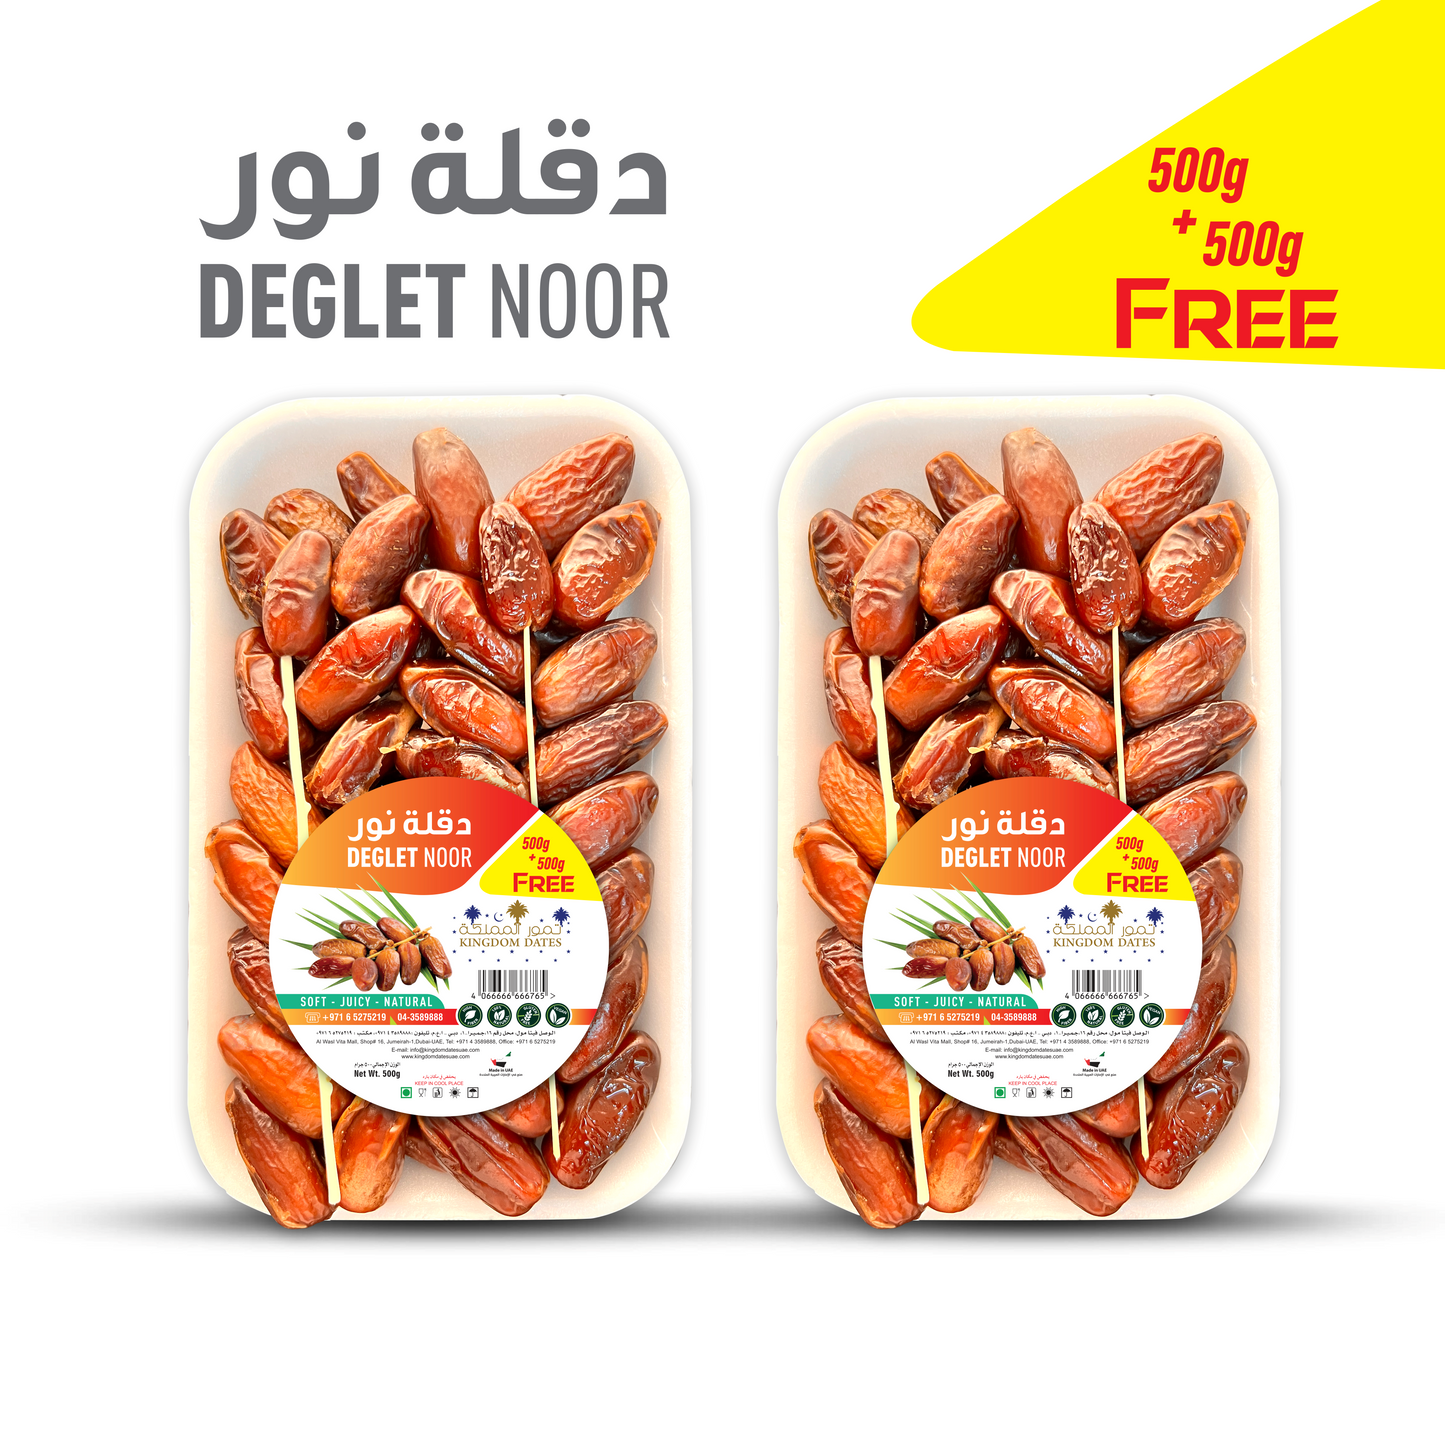 Deglet Nour Dates Each 500g Buy 1 Get 1 Free